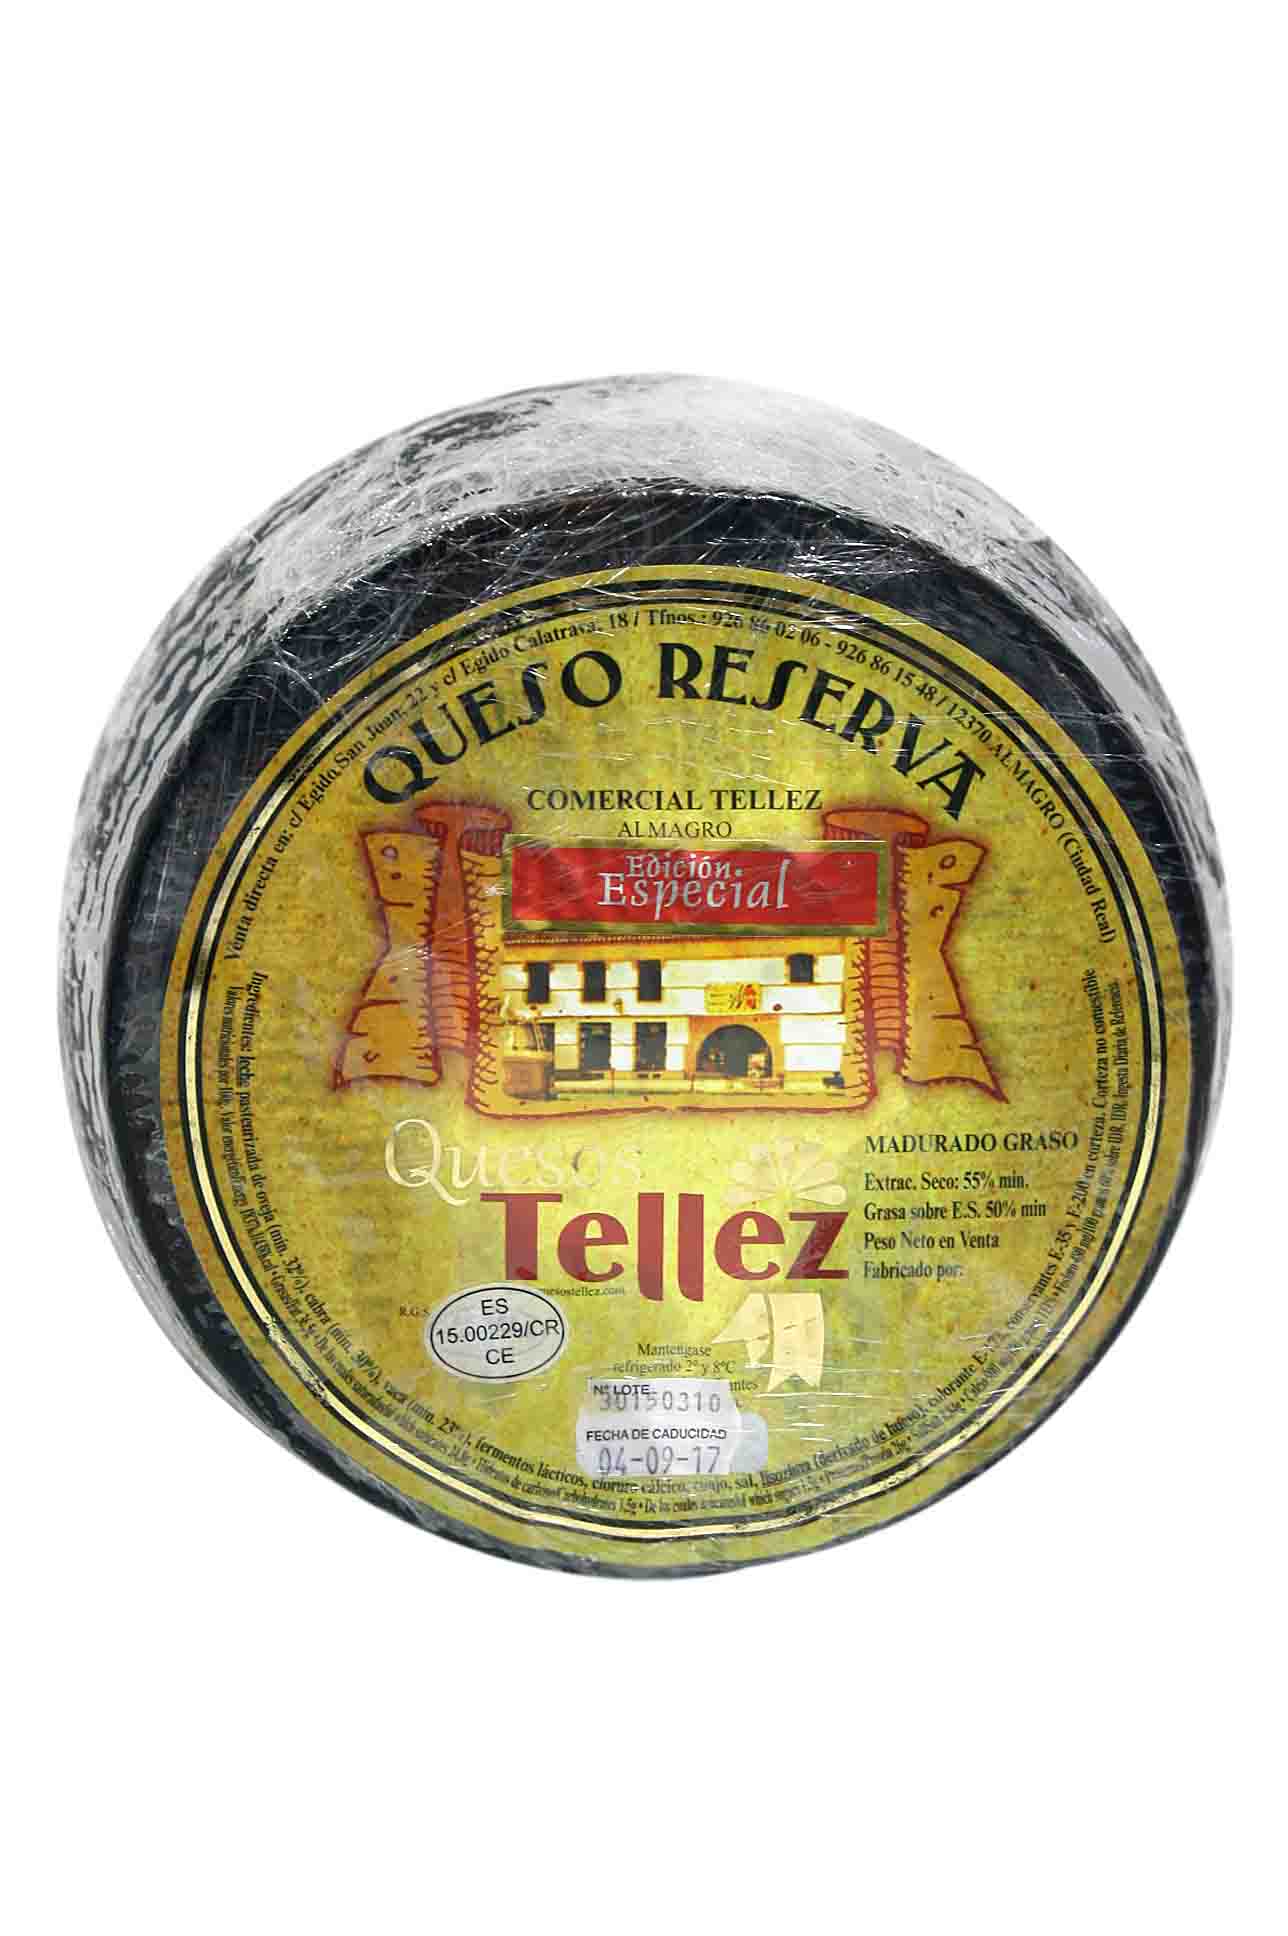 Tellez aged cheese